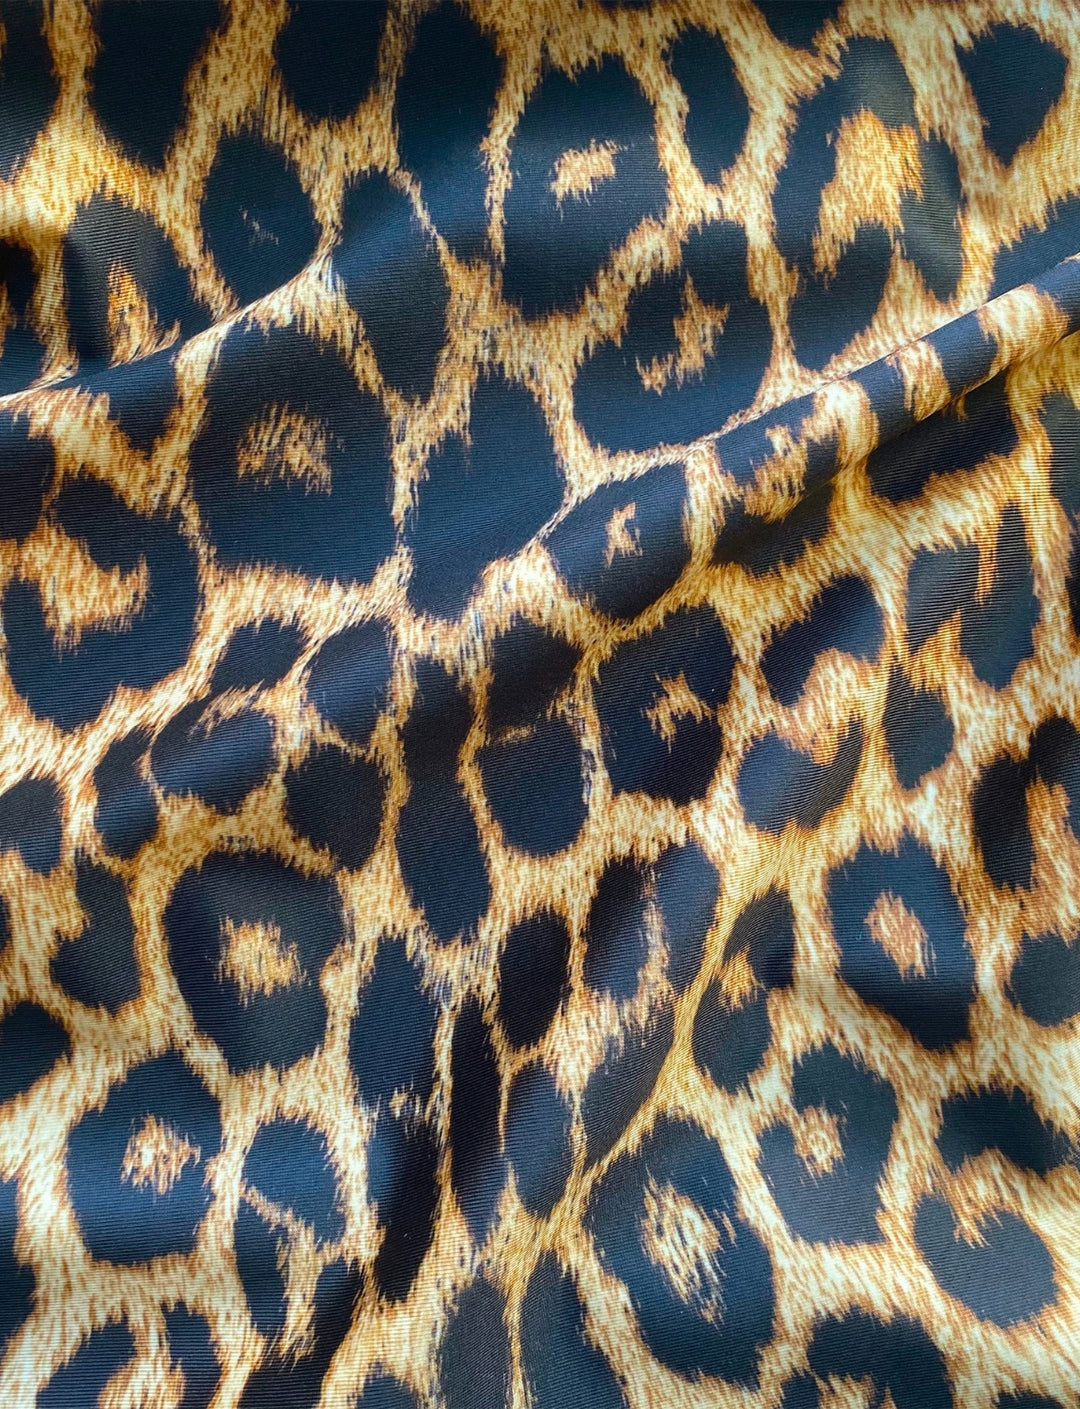 leopard print fabric swatch